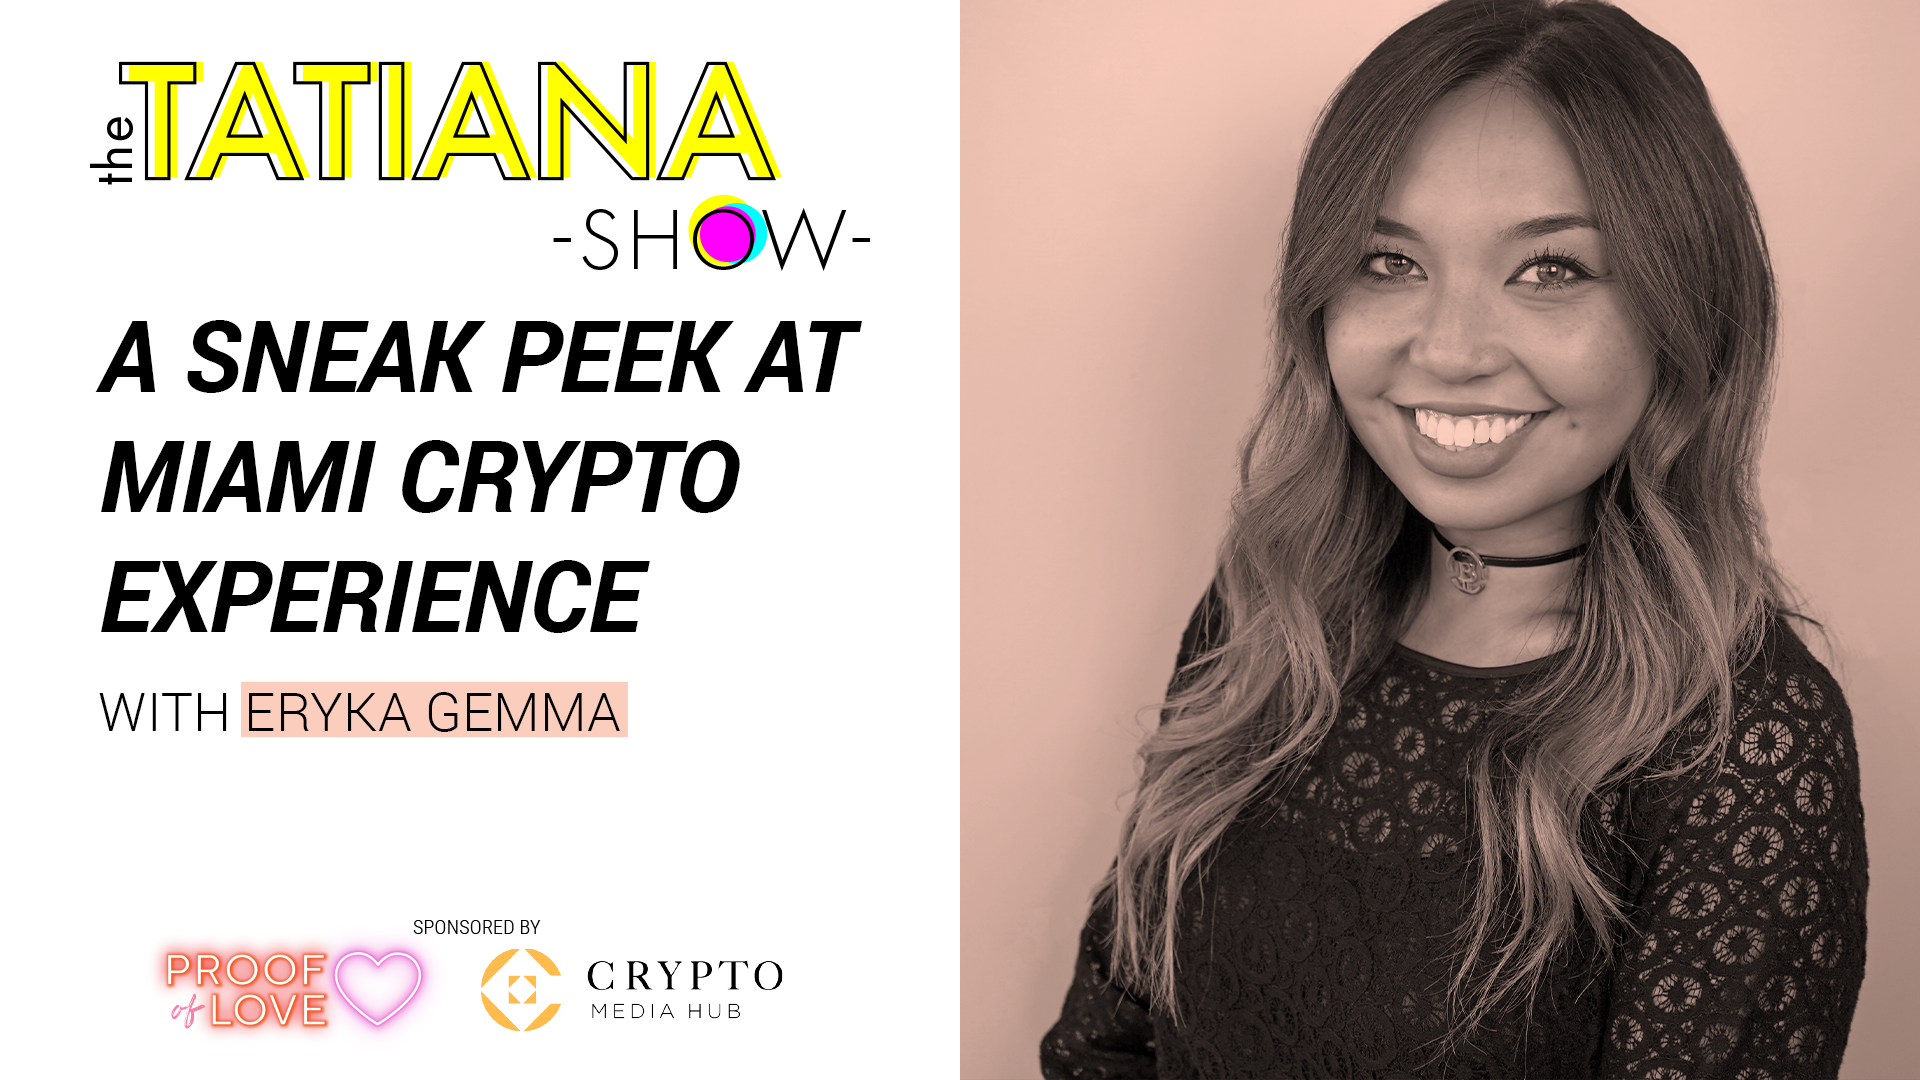 A Sneak Peek at Miami Crypto Experience with Eryka Gemma